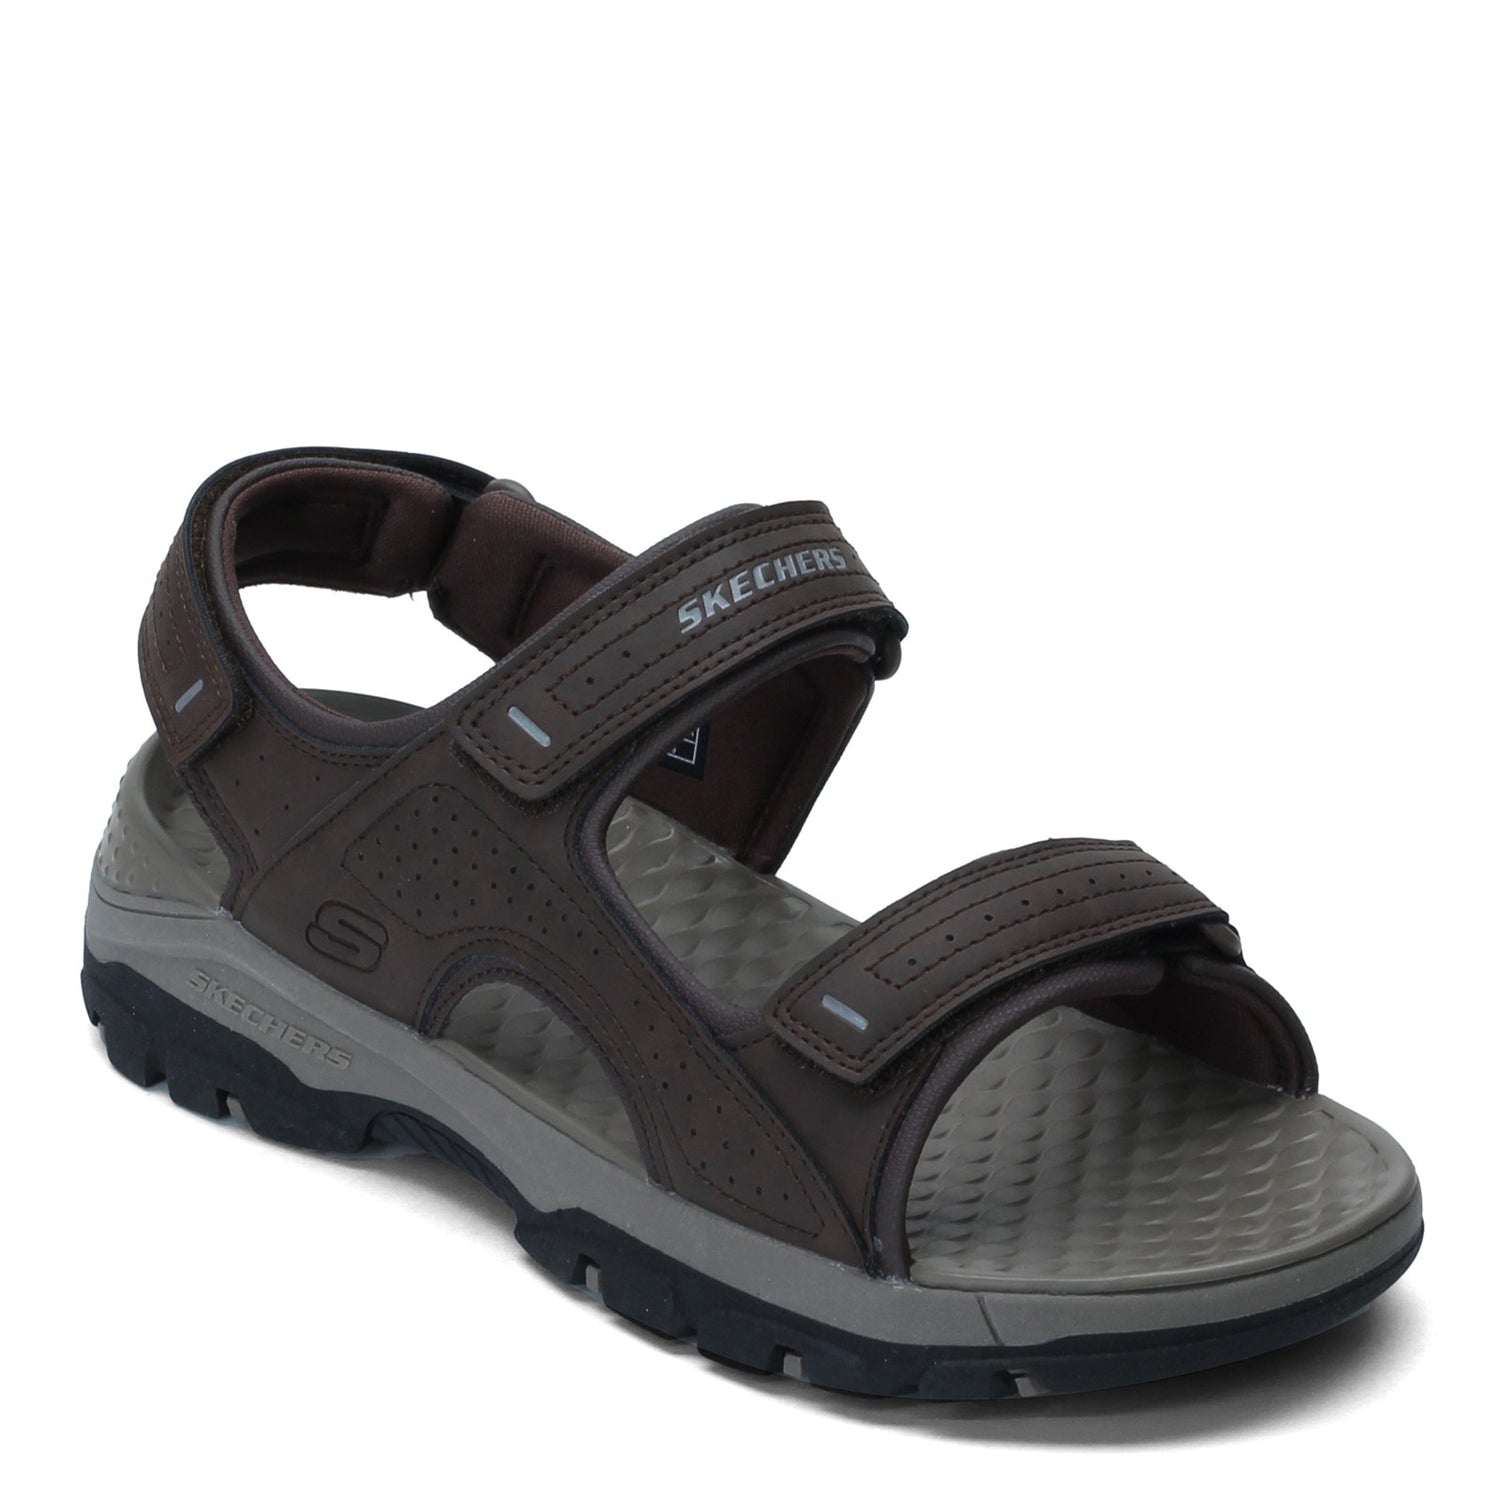 Peltz Shoes  Men's Skechers Tresmen Garo Sandal - Wide Width CHOCOLATE 204105WW-CHOC